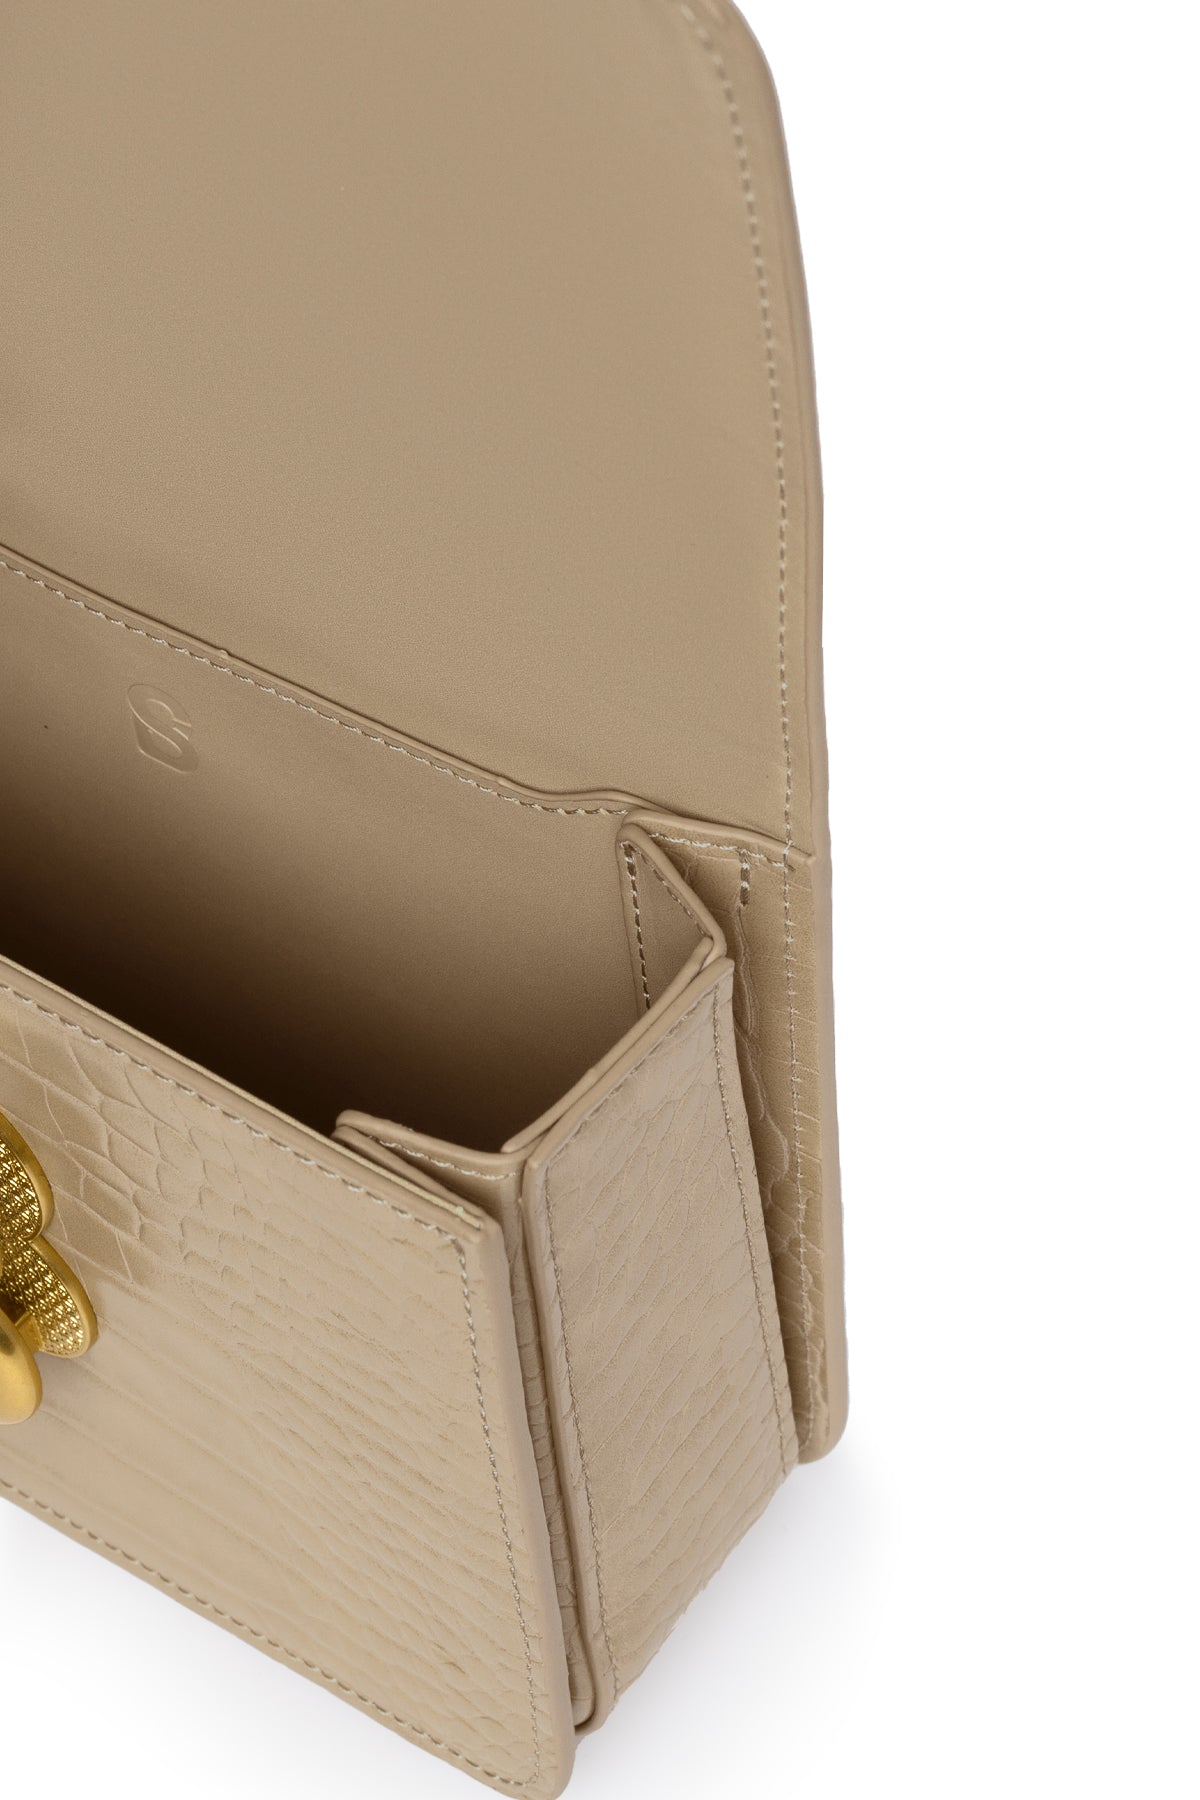 Buttonscarves - The Audrey Monogram Bag 